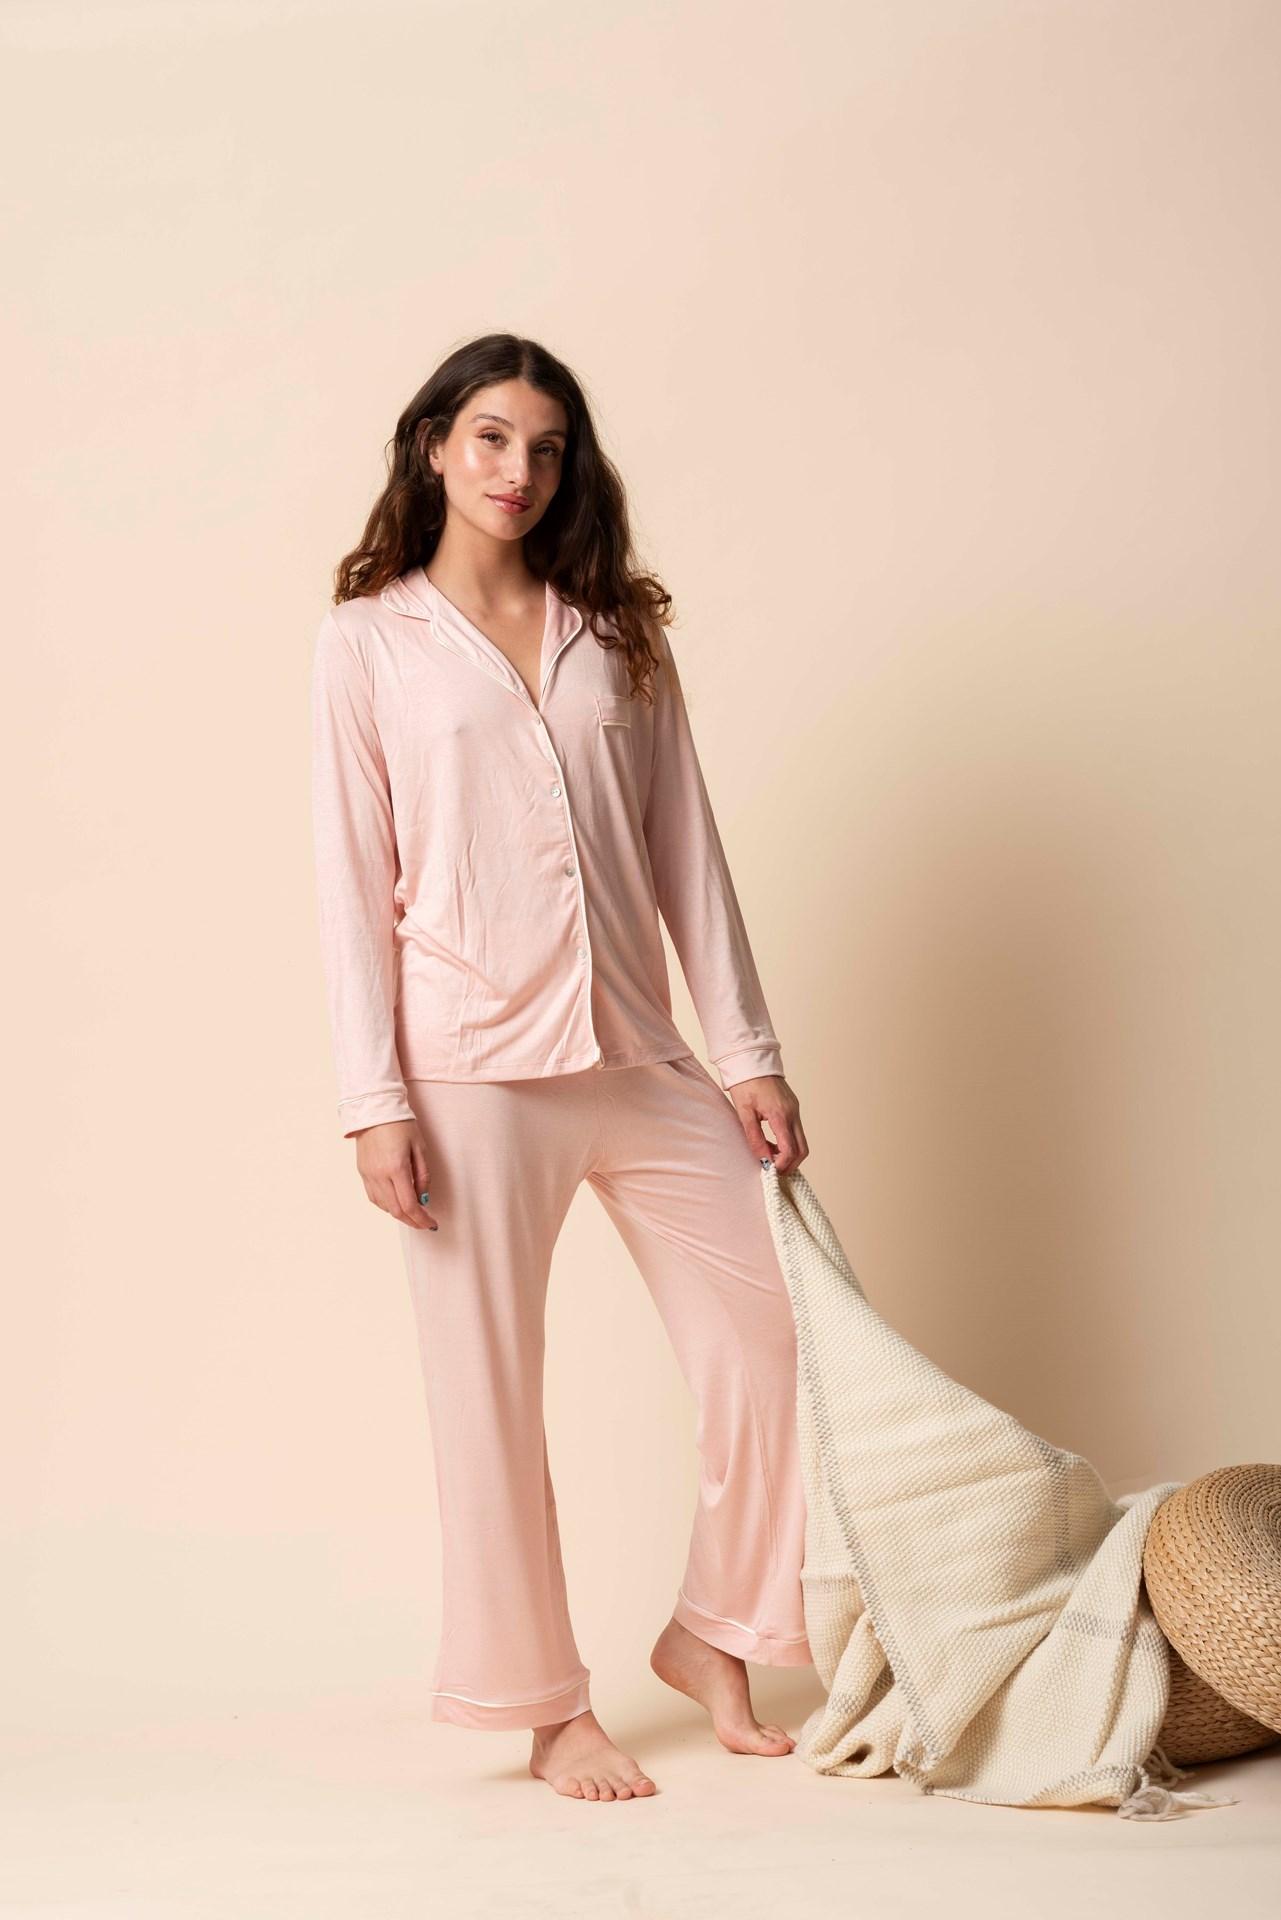 Donatella - Pijama Camisero Largo rosado pastel m